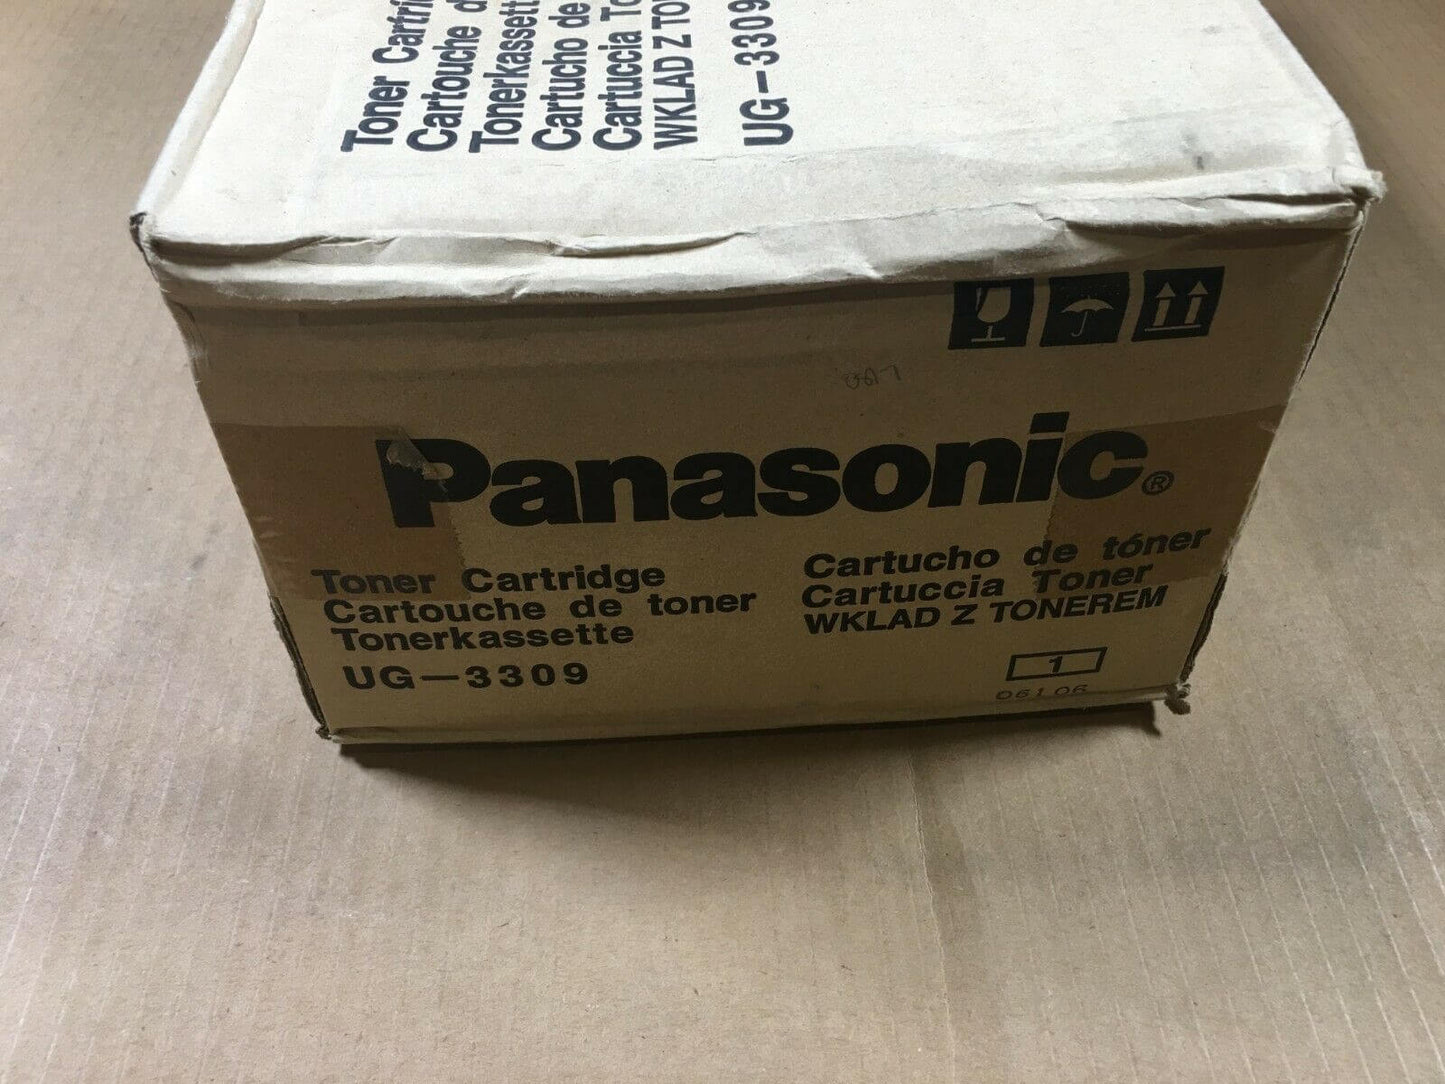 Genuine Panasonic Black Toner Cartridge For UG-3309 Same Day Shipping - copier-clearance-center